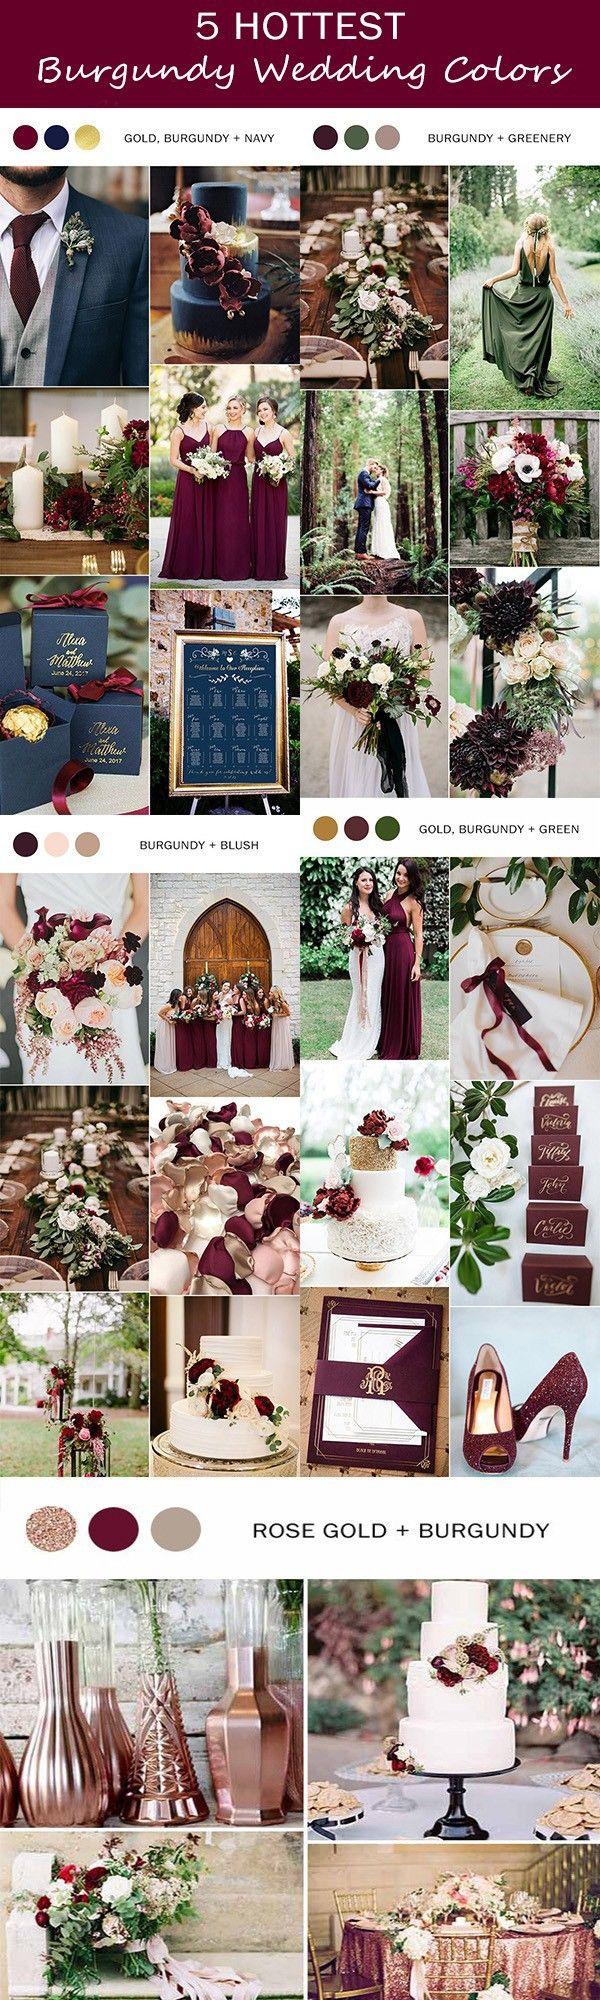 Wedding - Trending-5 Perfect Burgundy Wedding Color Ideas To Love